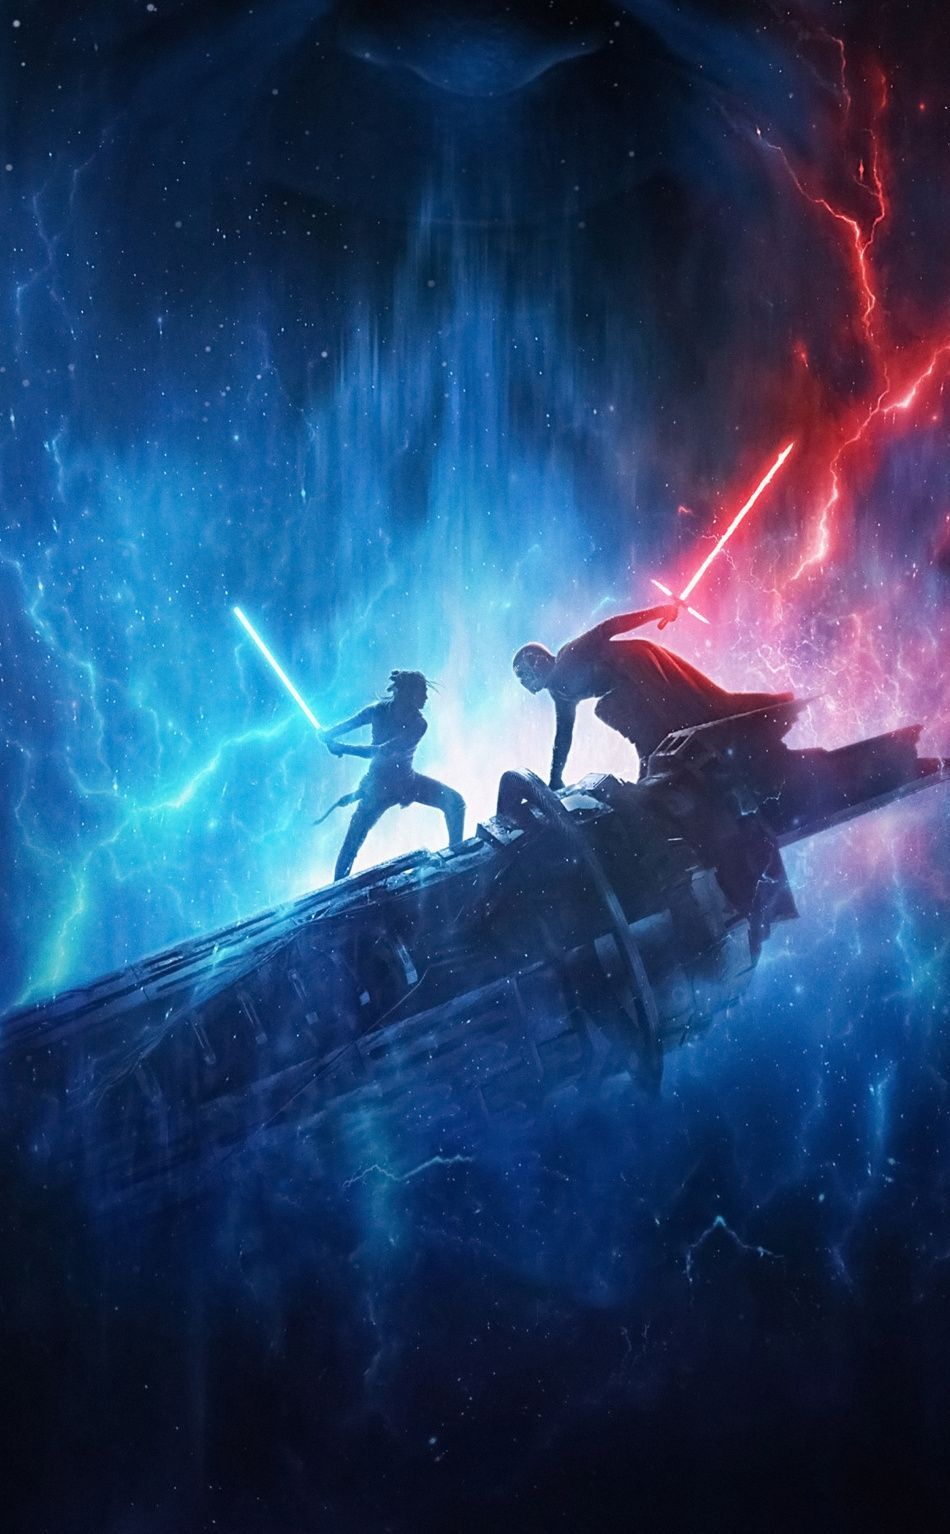 Star Wars: The Rise of Skywalker, Kylo Ren and Rey, 2019 movie wallpaper. Star wars wallpaper iphone, Star wars poster, Star wars wallpaper